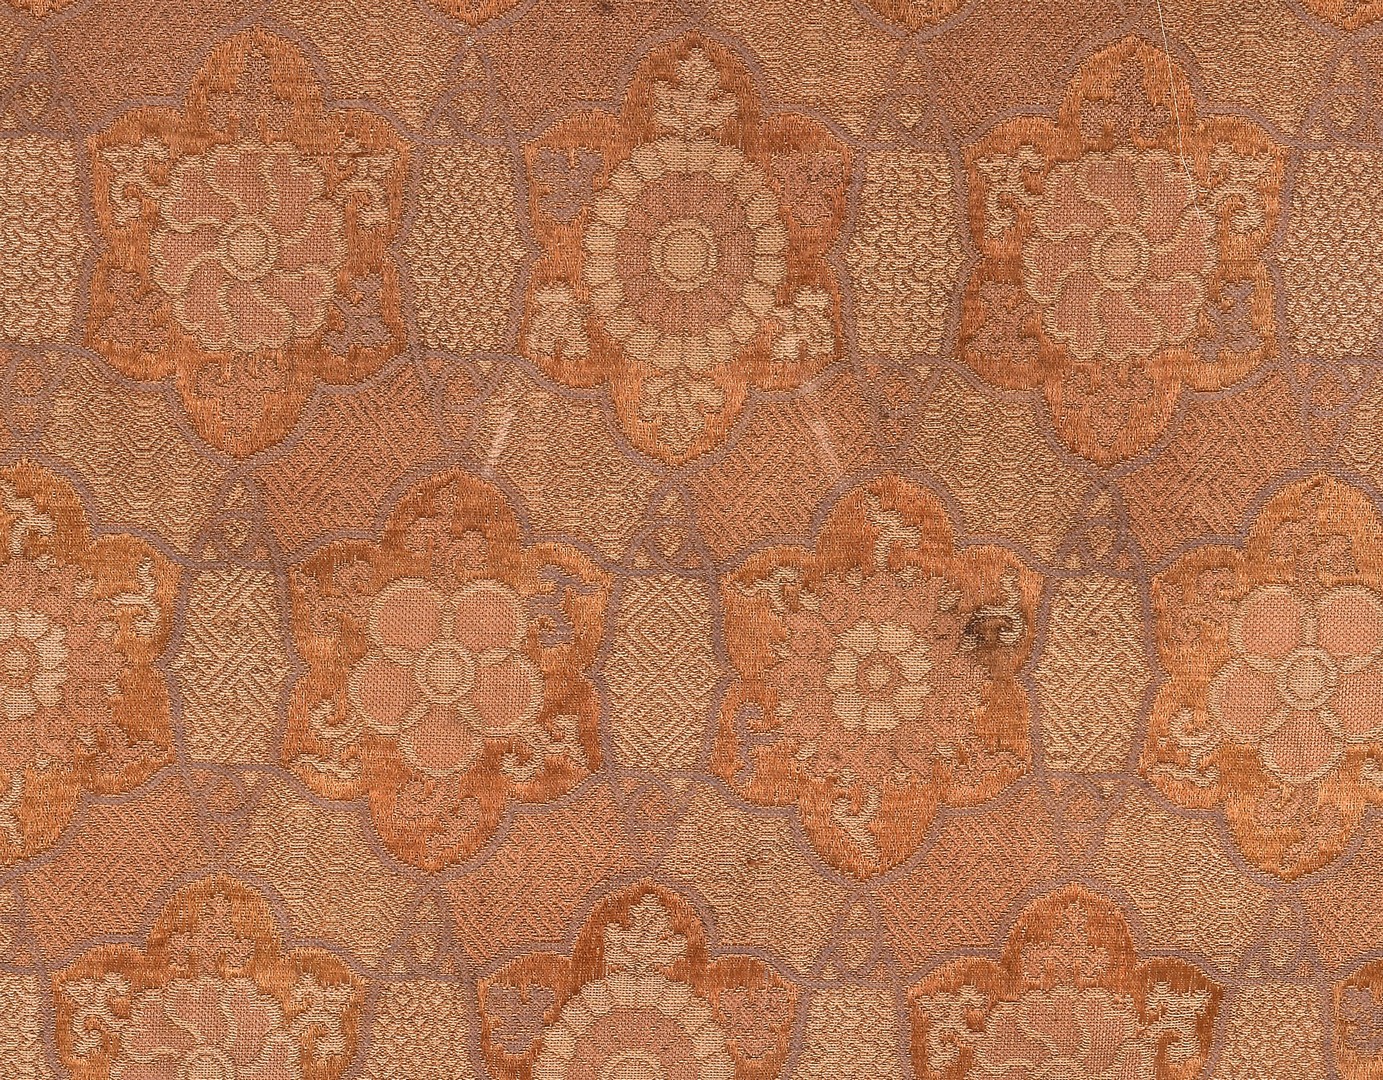 Lot 931: 3 Asian Silk Brocade Textiles